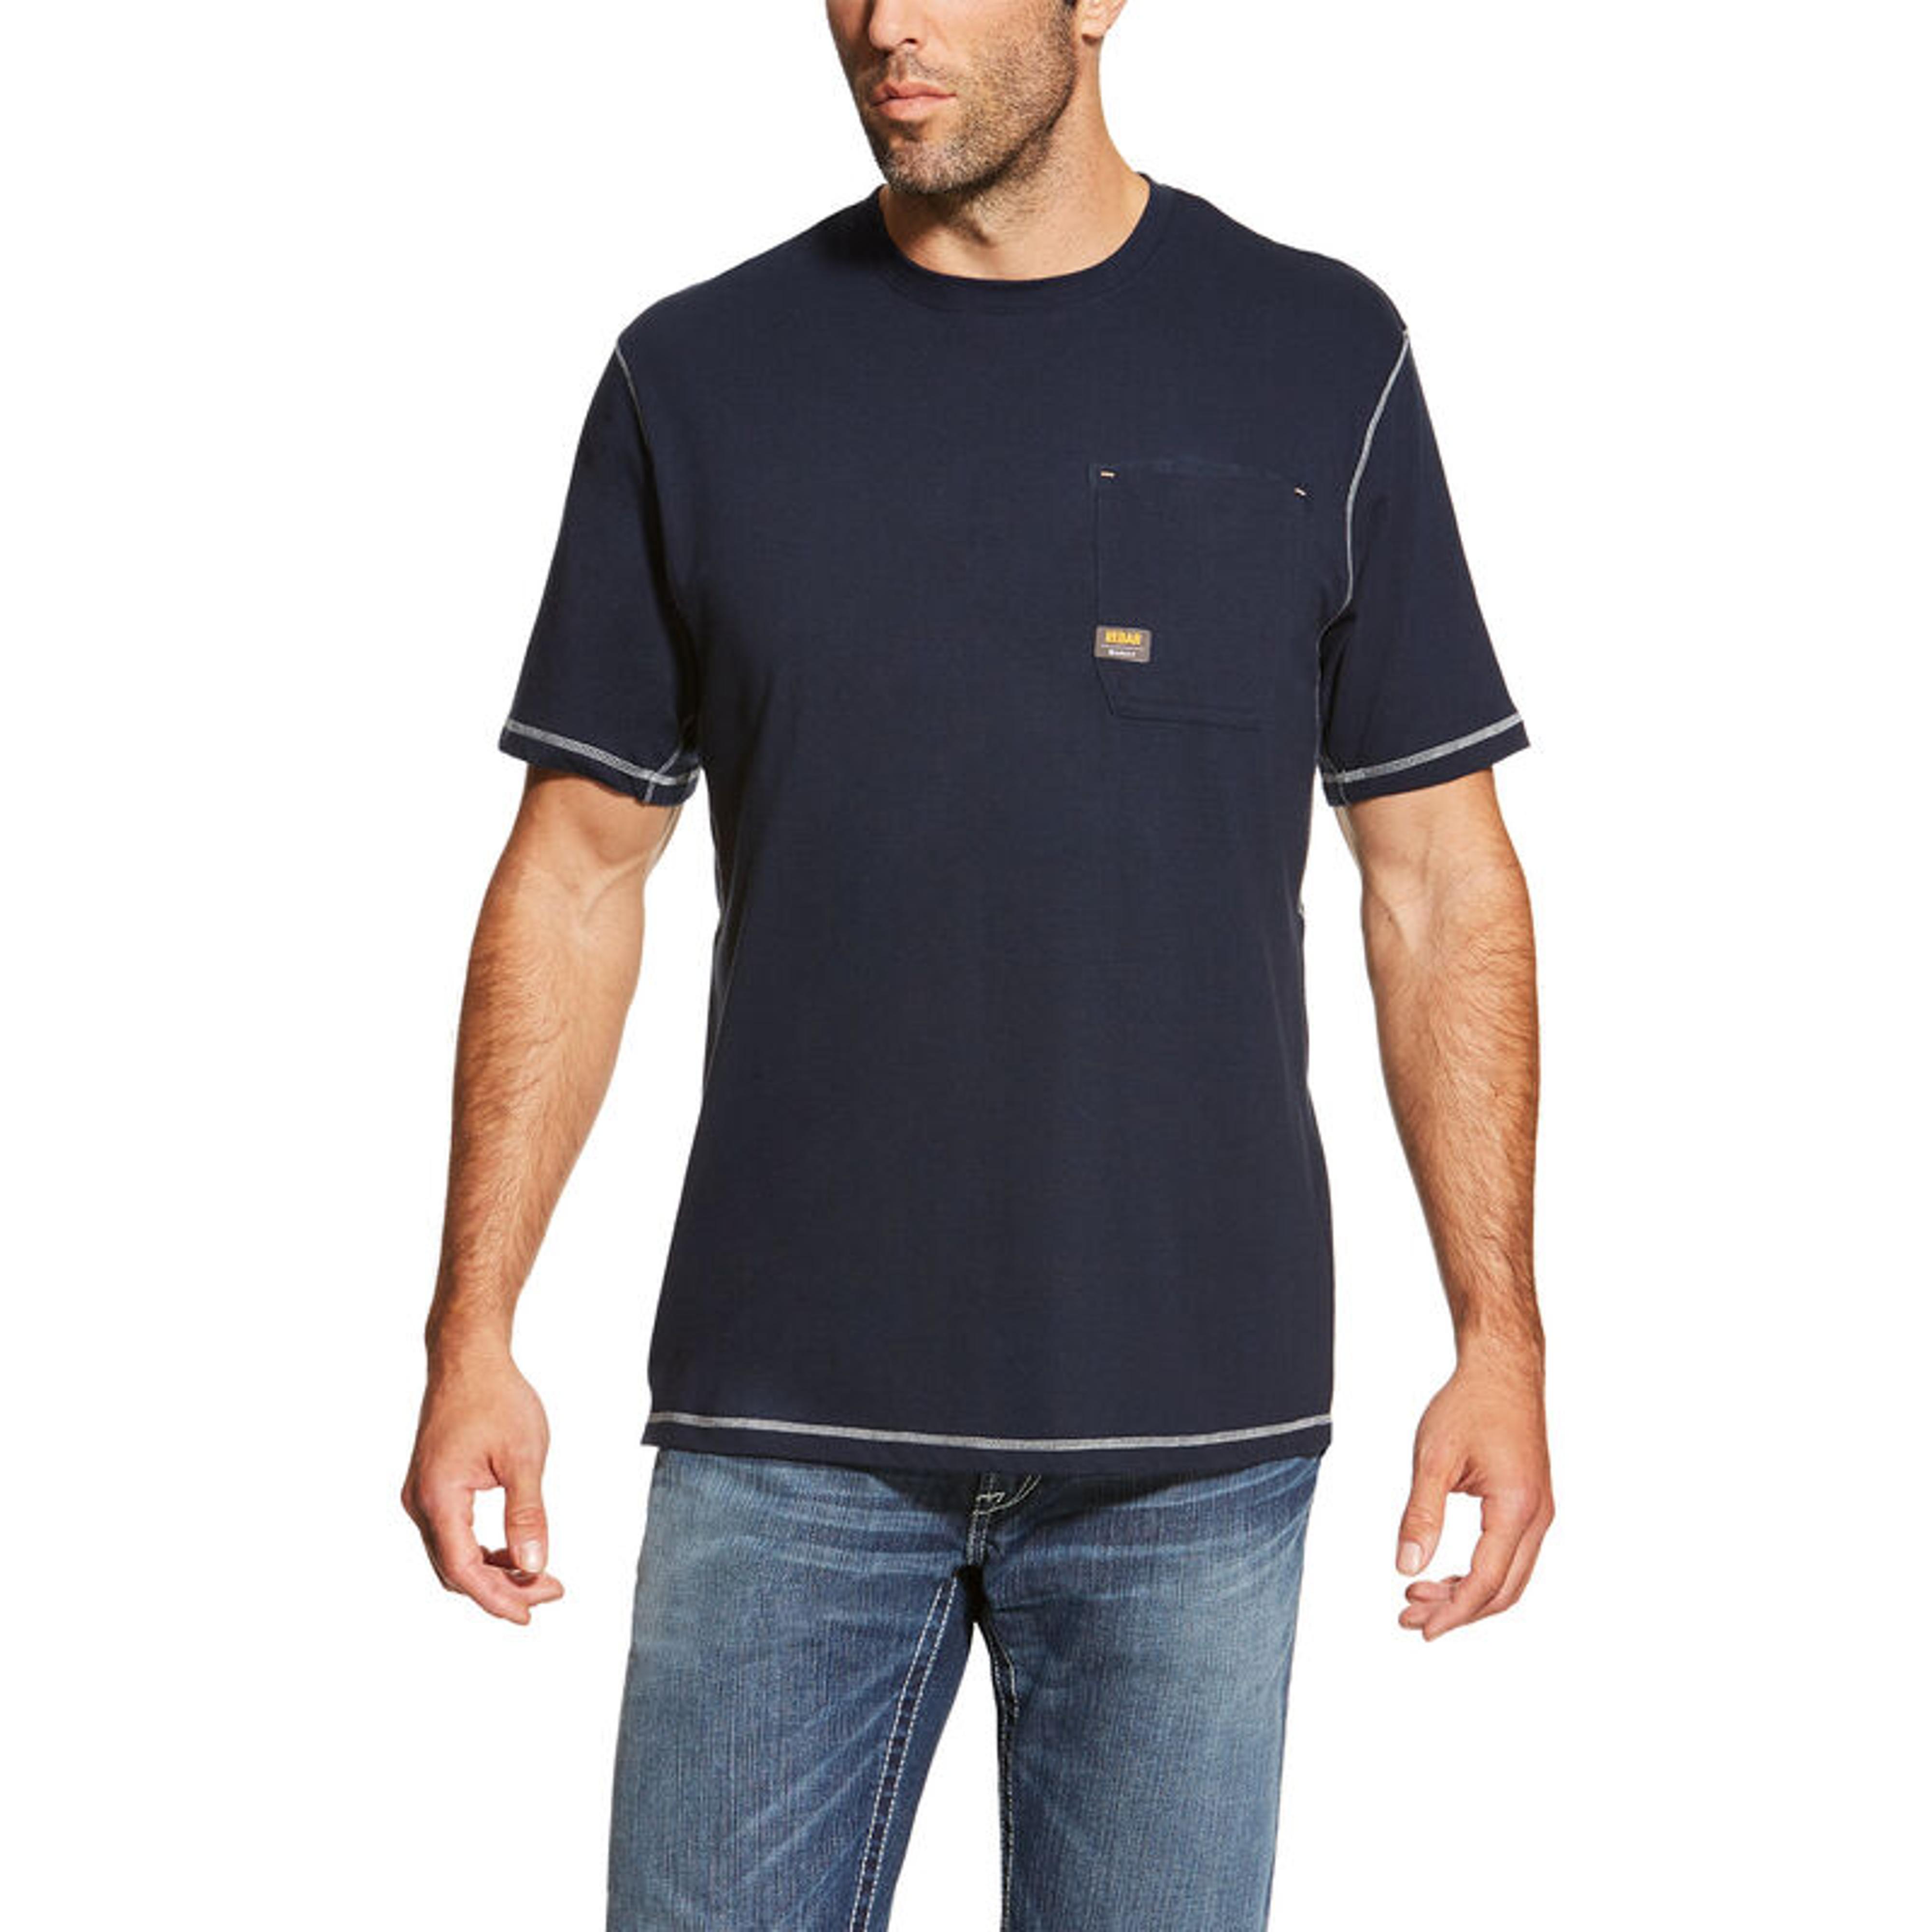  Rebar Workman T- Shirt